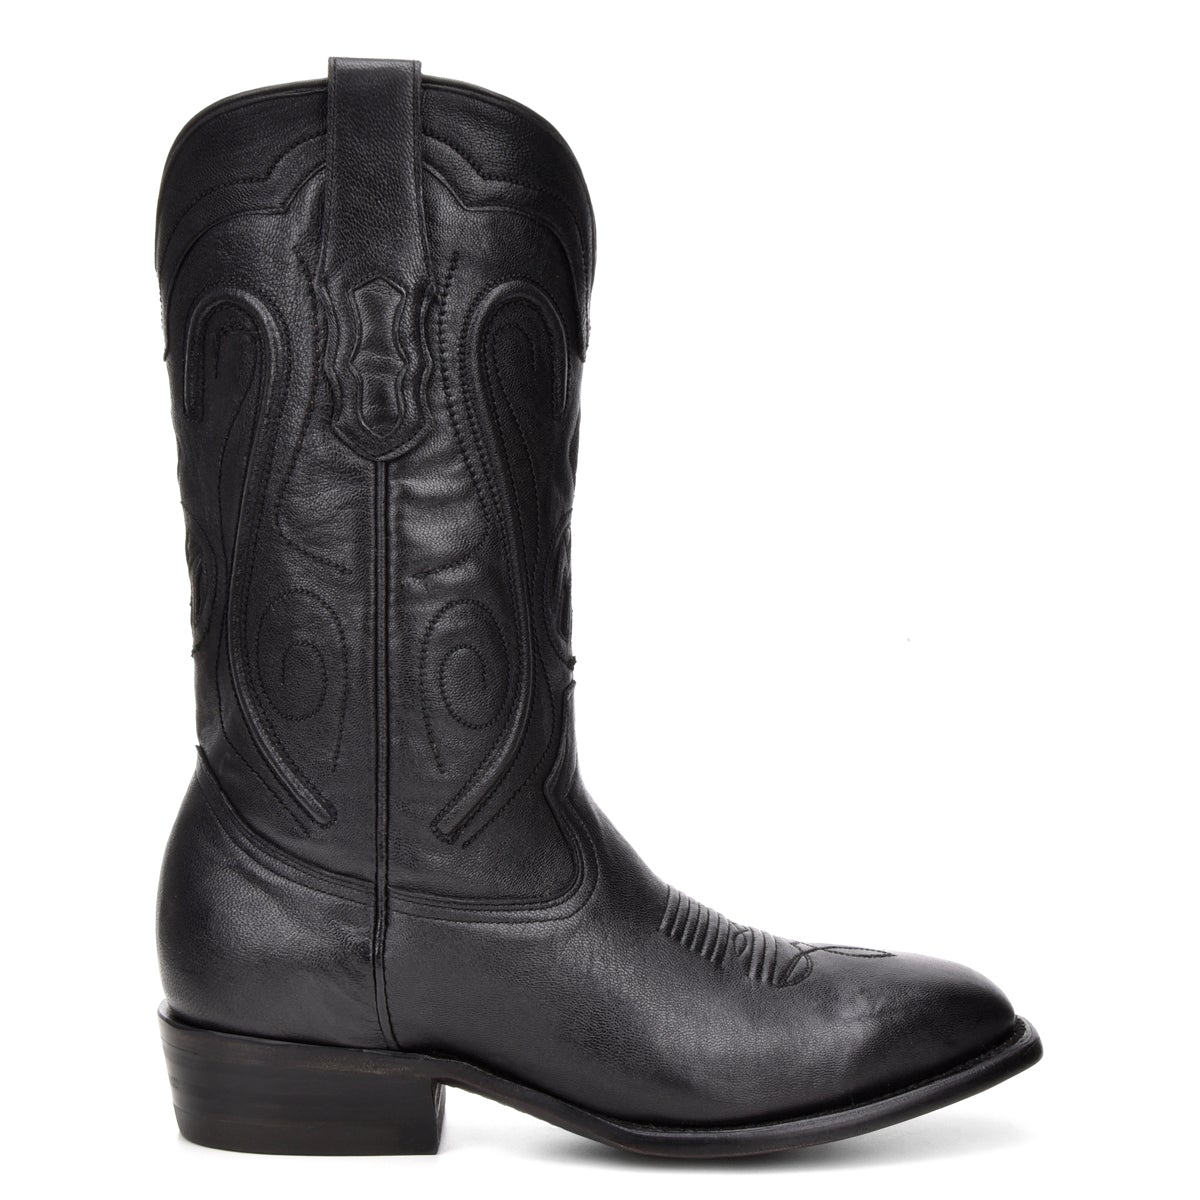 M2136 - Bota Botas de vestir vaqueras negras para hombre en pie – Kuet.us - Cuadra Boots - Western Cowboy, Casual Fashion and Dress Boots